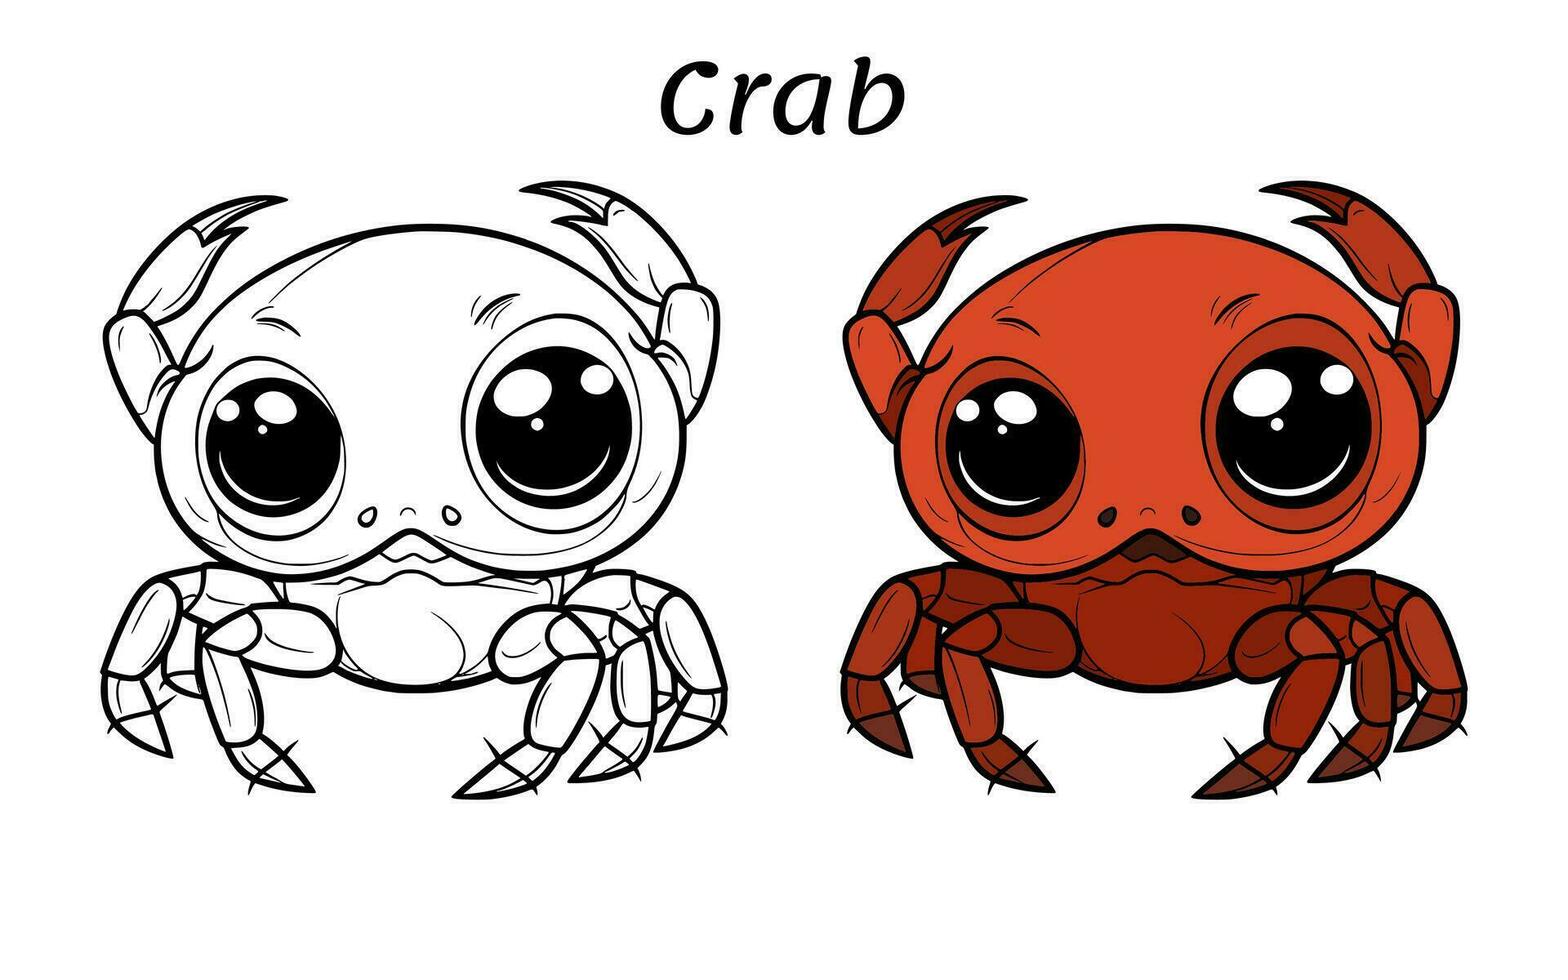 Cute Crab Animal Coloring Book Illustration vector